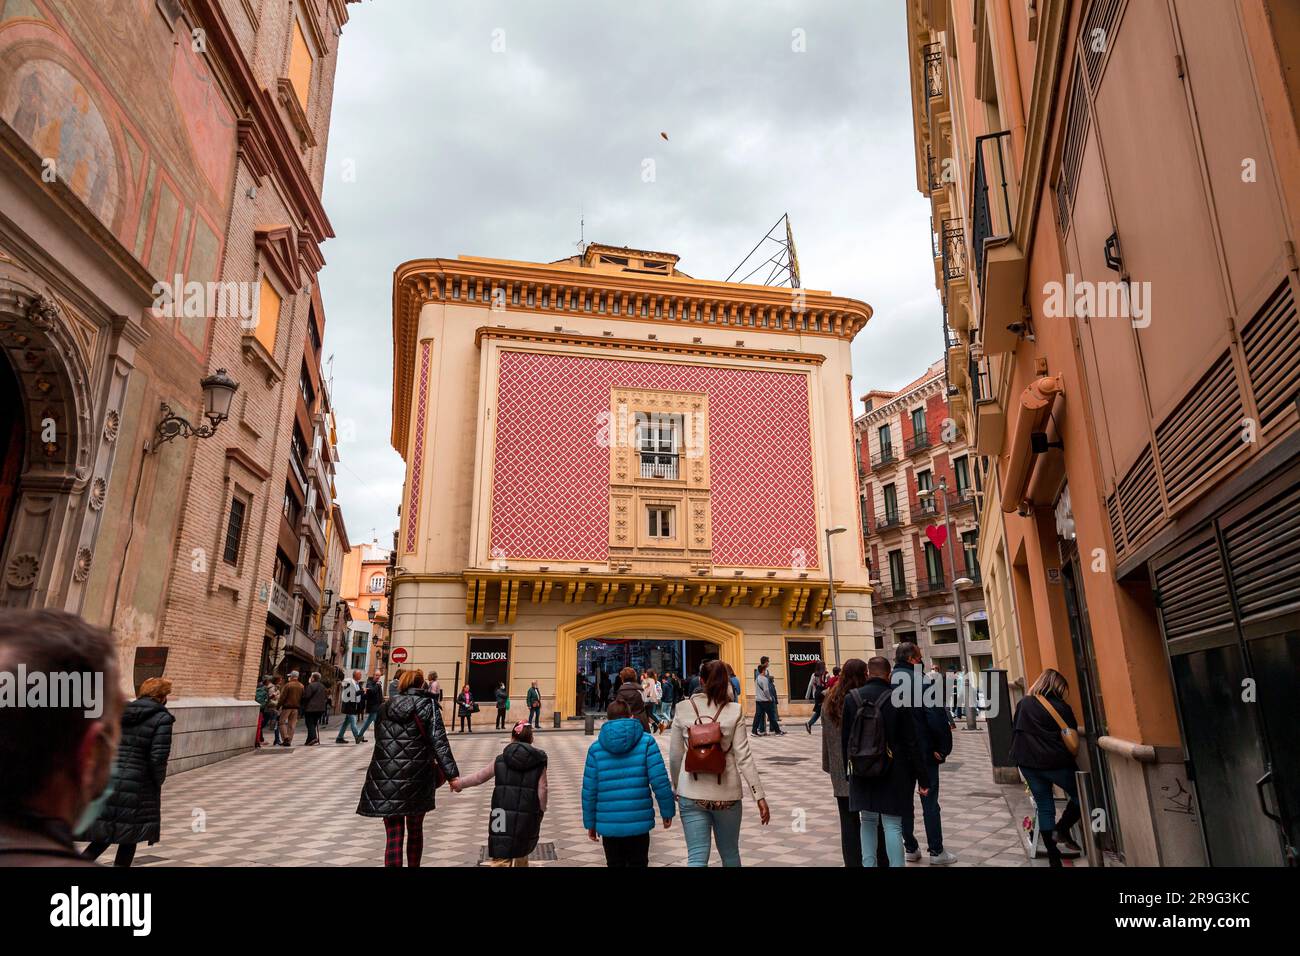 Granada, Spain - February 26, 2022: The former cinema building of Aliatar located on the Recogidas street in Granada, Spain. Stock Photo